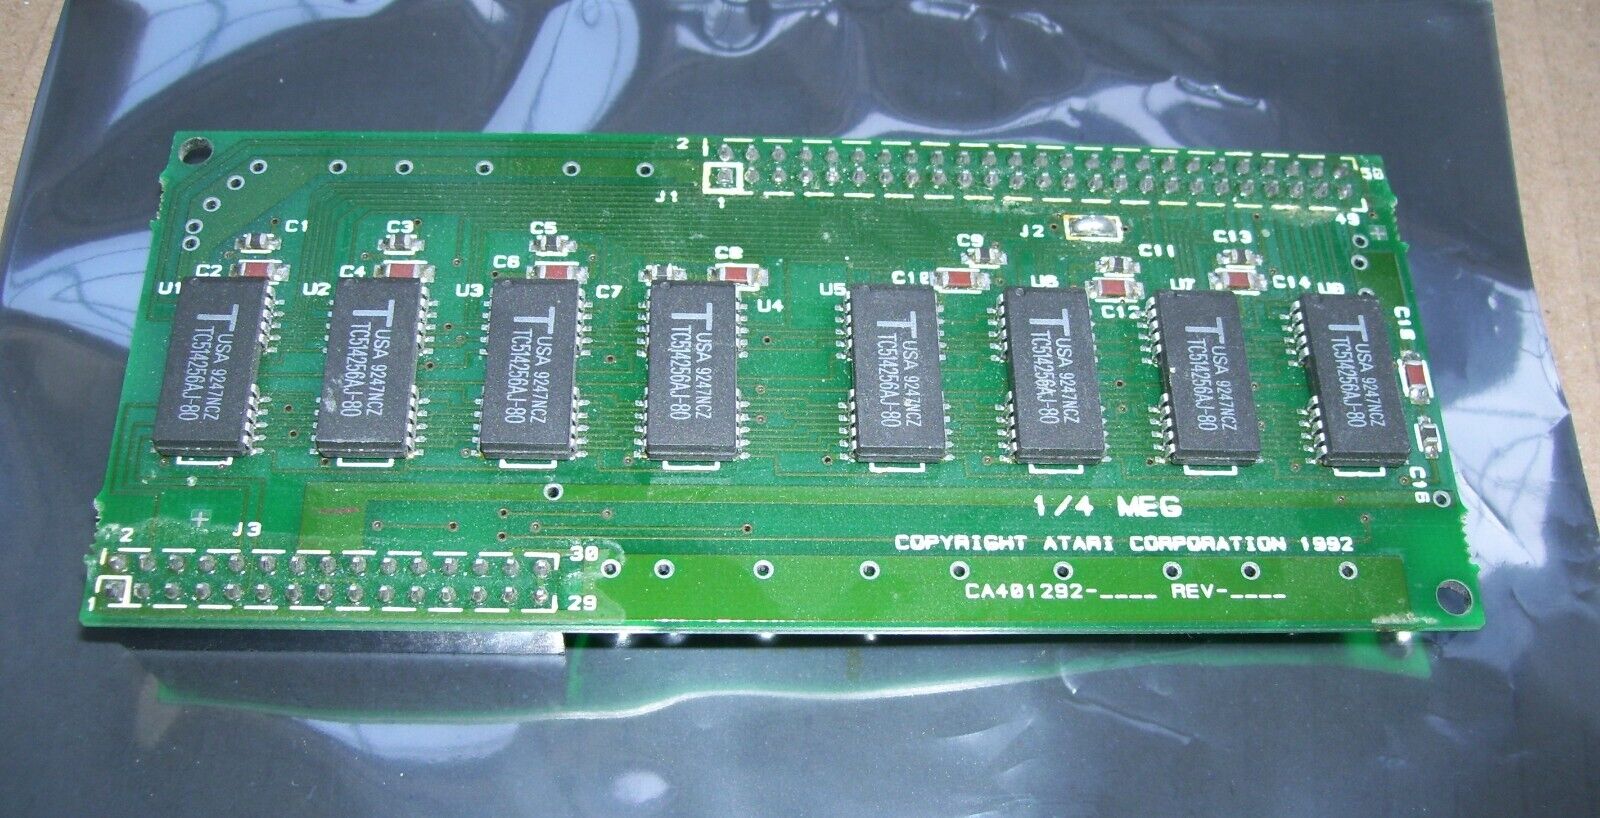 Atari Falcon 030 Computer 1MB Memory card TESTED OK TC514256AJ-80 Dram IC Chips